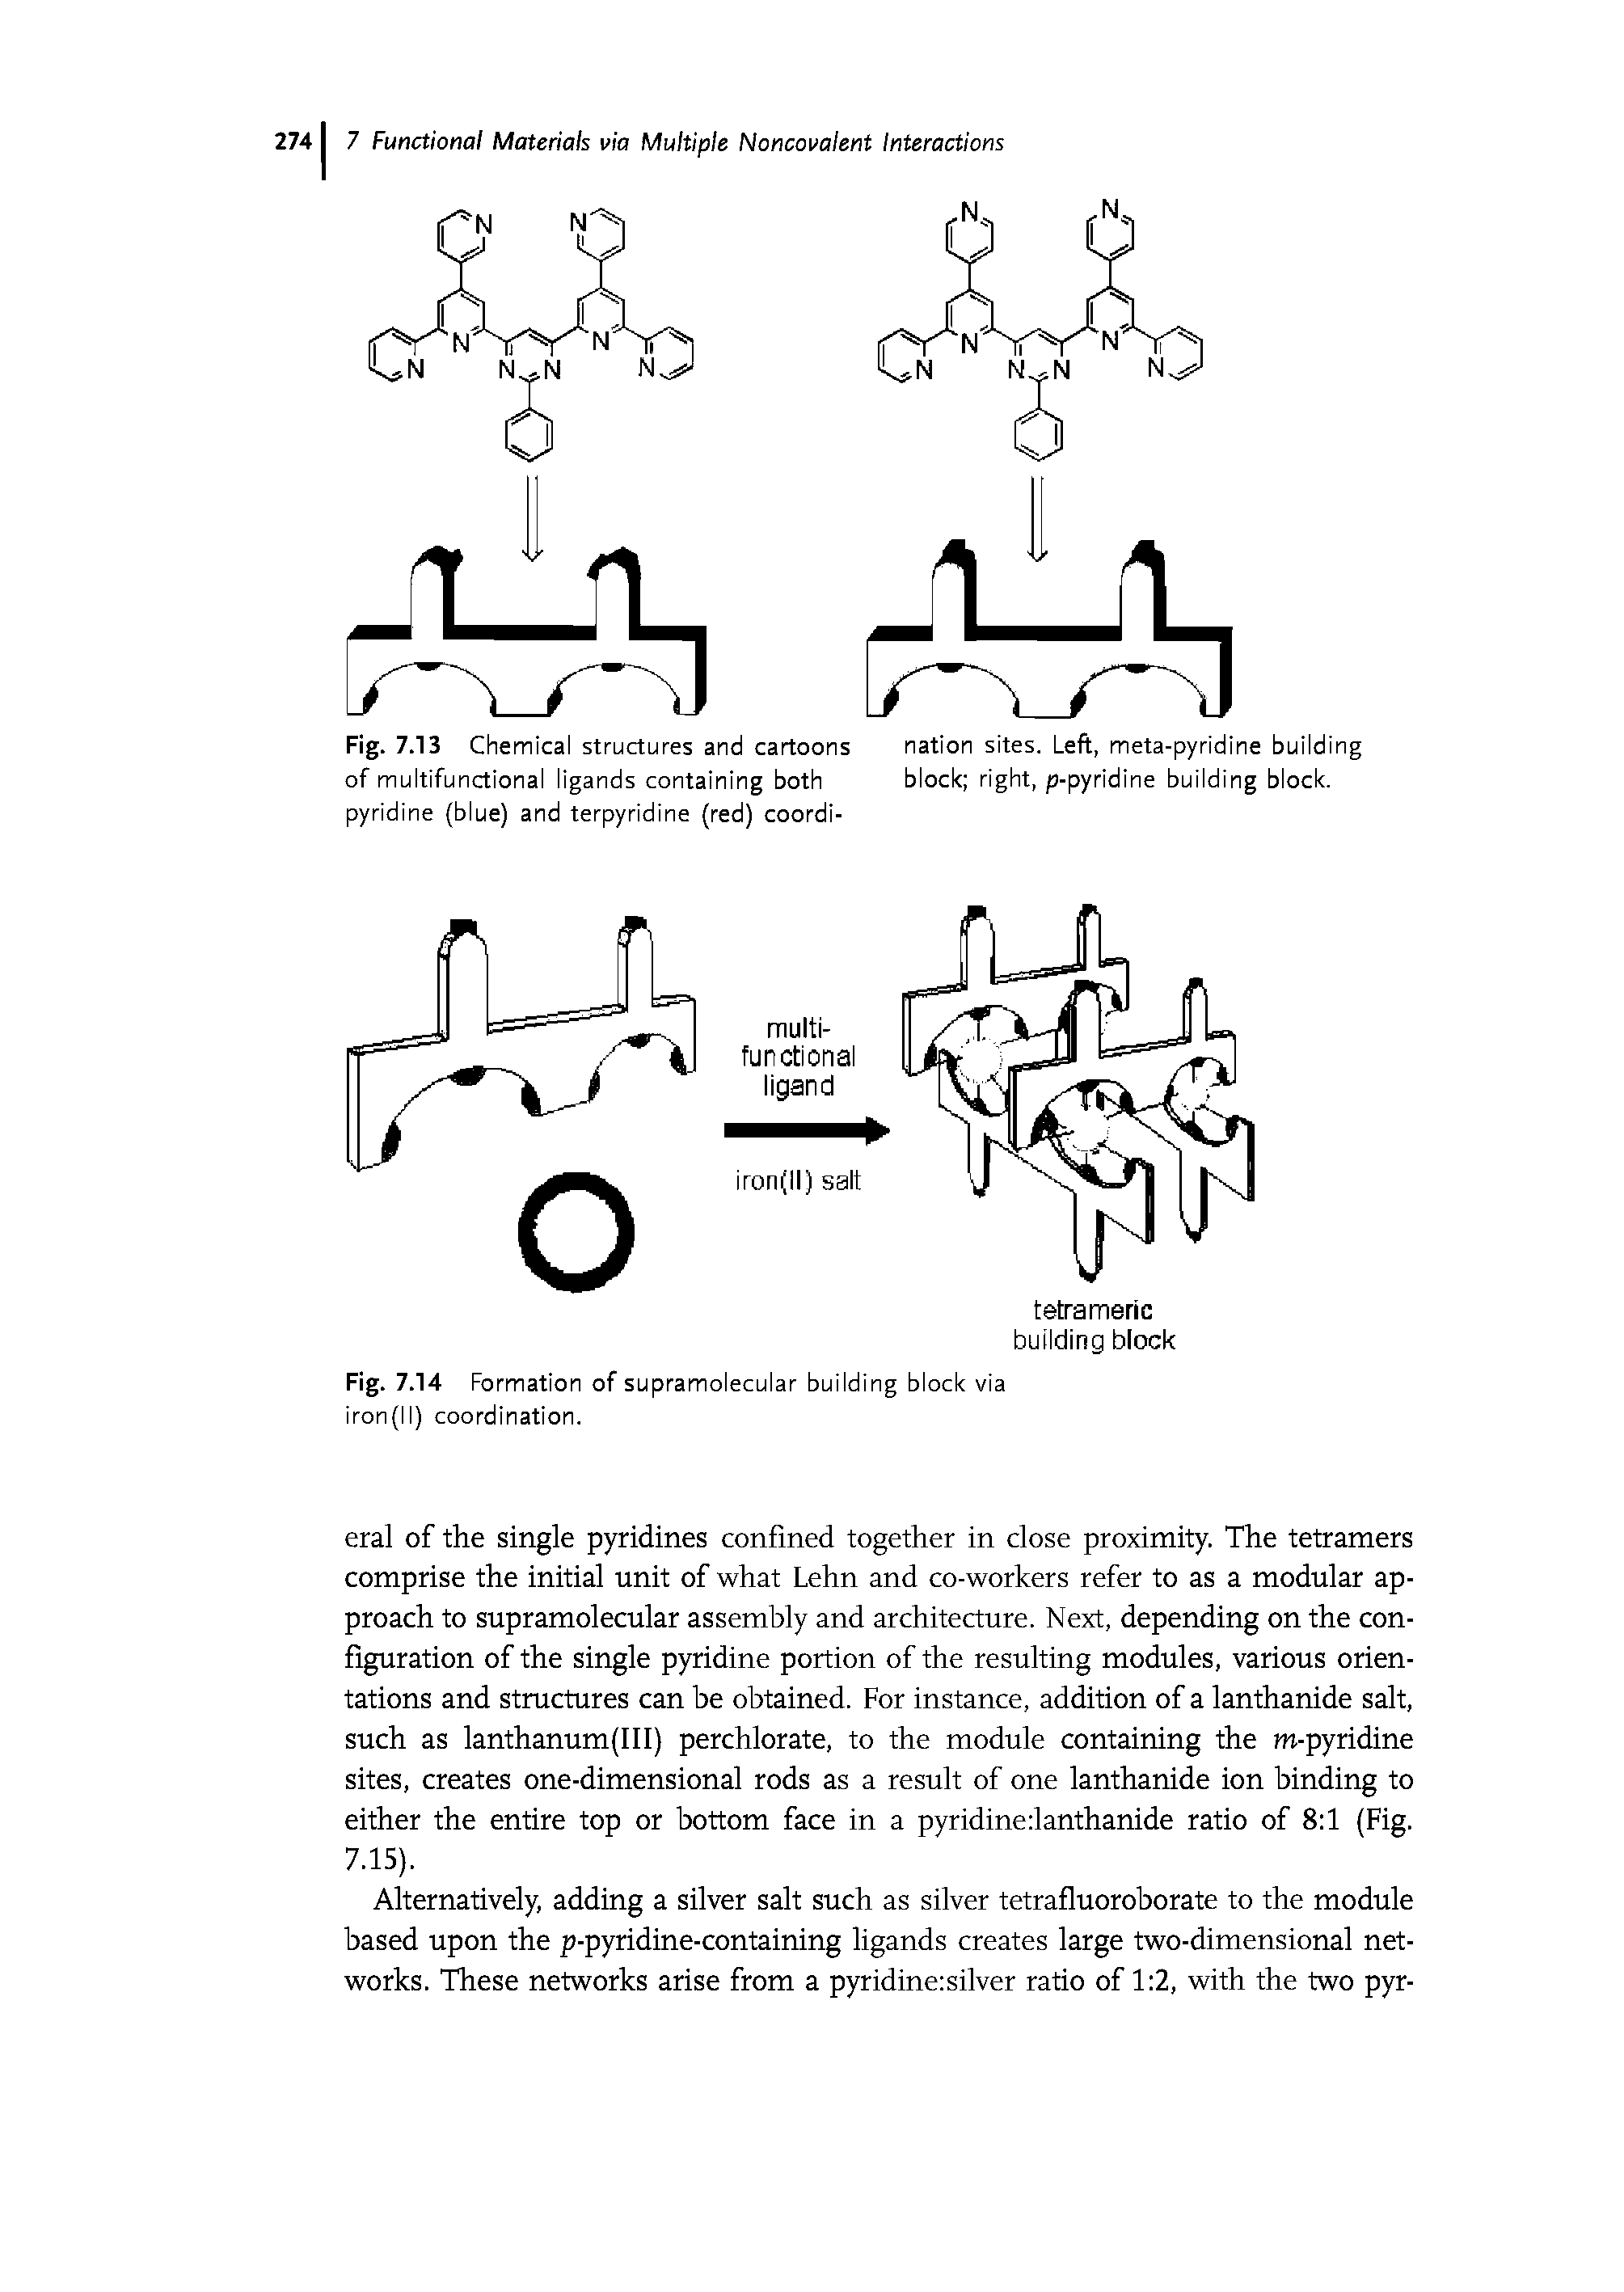 Fig. 7.14 Formation of supramolecular building block via iron (I I) coordination.